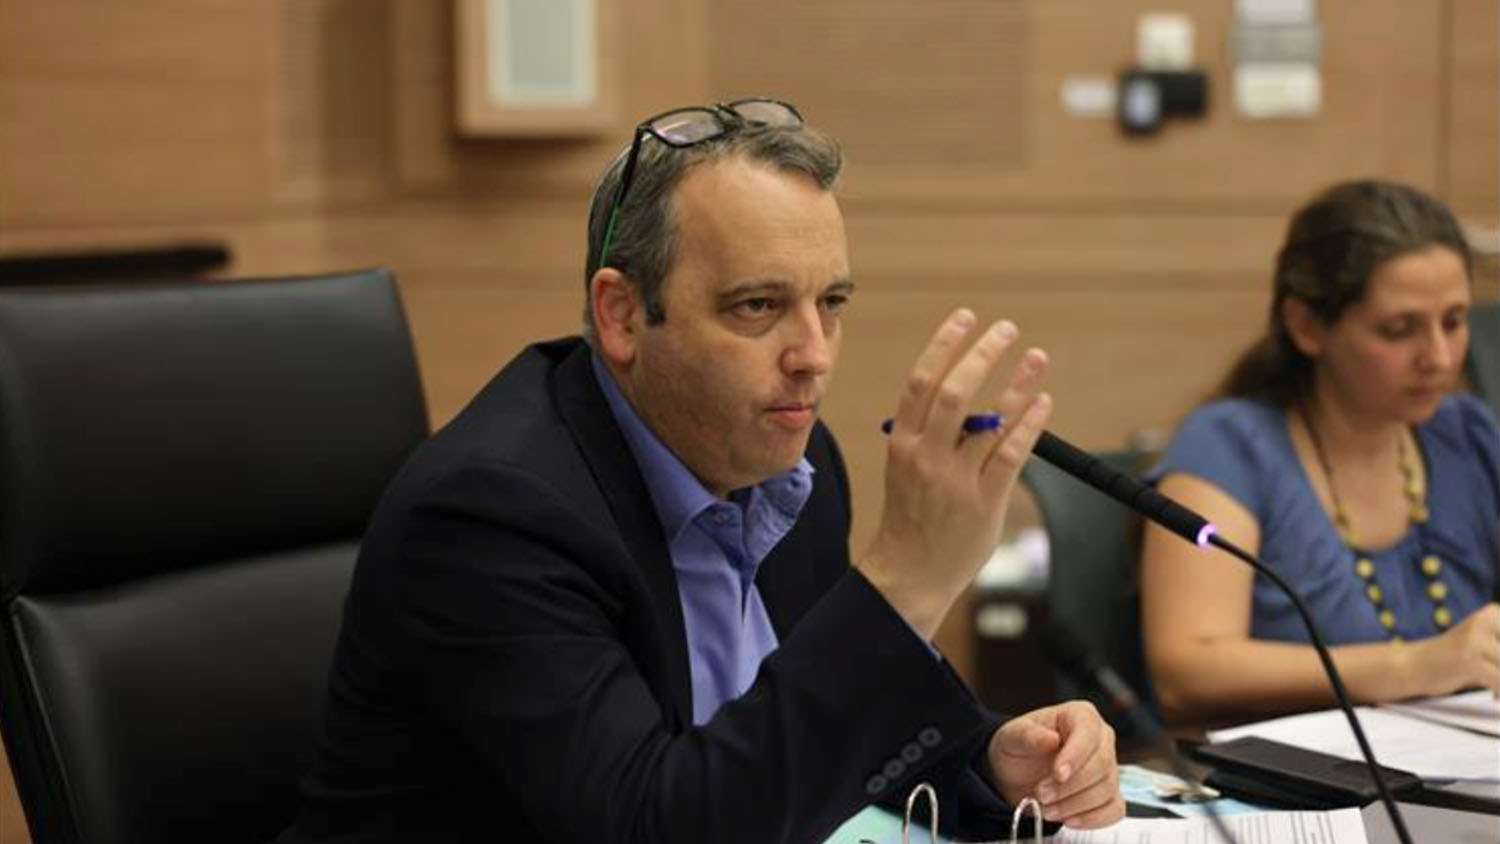 Knesset member Gilad Karib on July 1, 2021. Photo by Noam Moshkowitz, Knesset Spokesperson’s Office